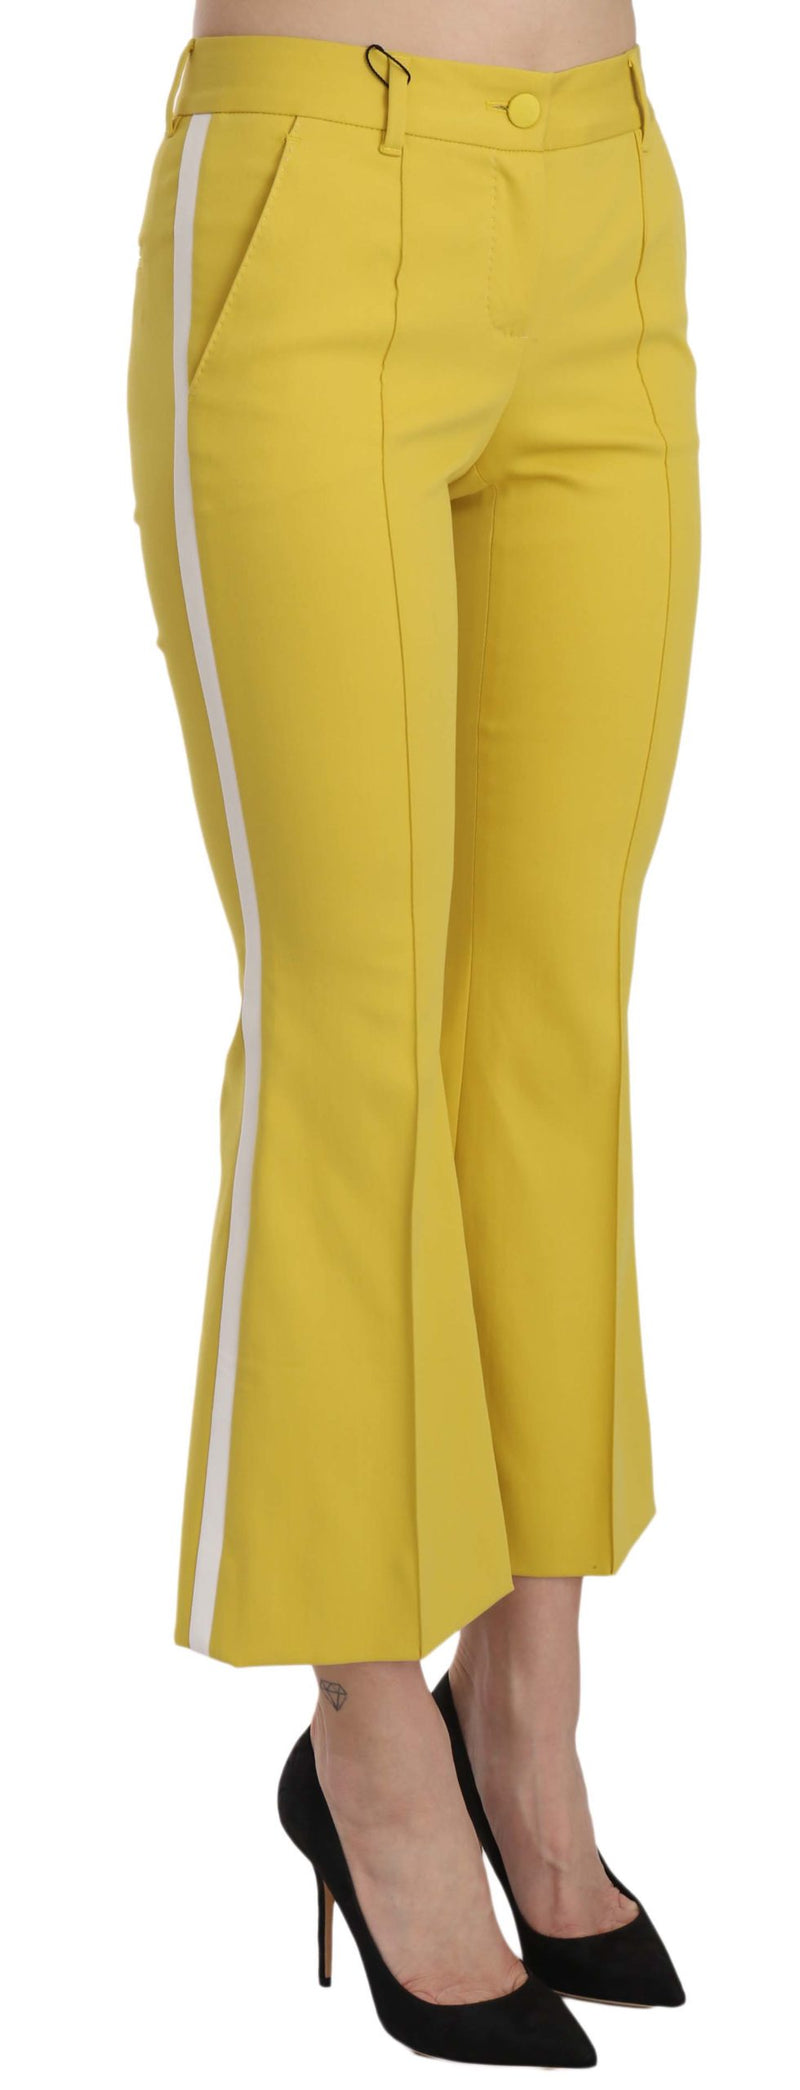 Dolce & Gabbana Chic Yellow Flare Pants for Elegant Women's Evenings